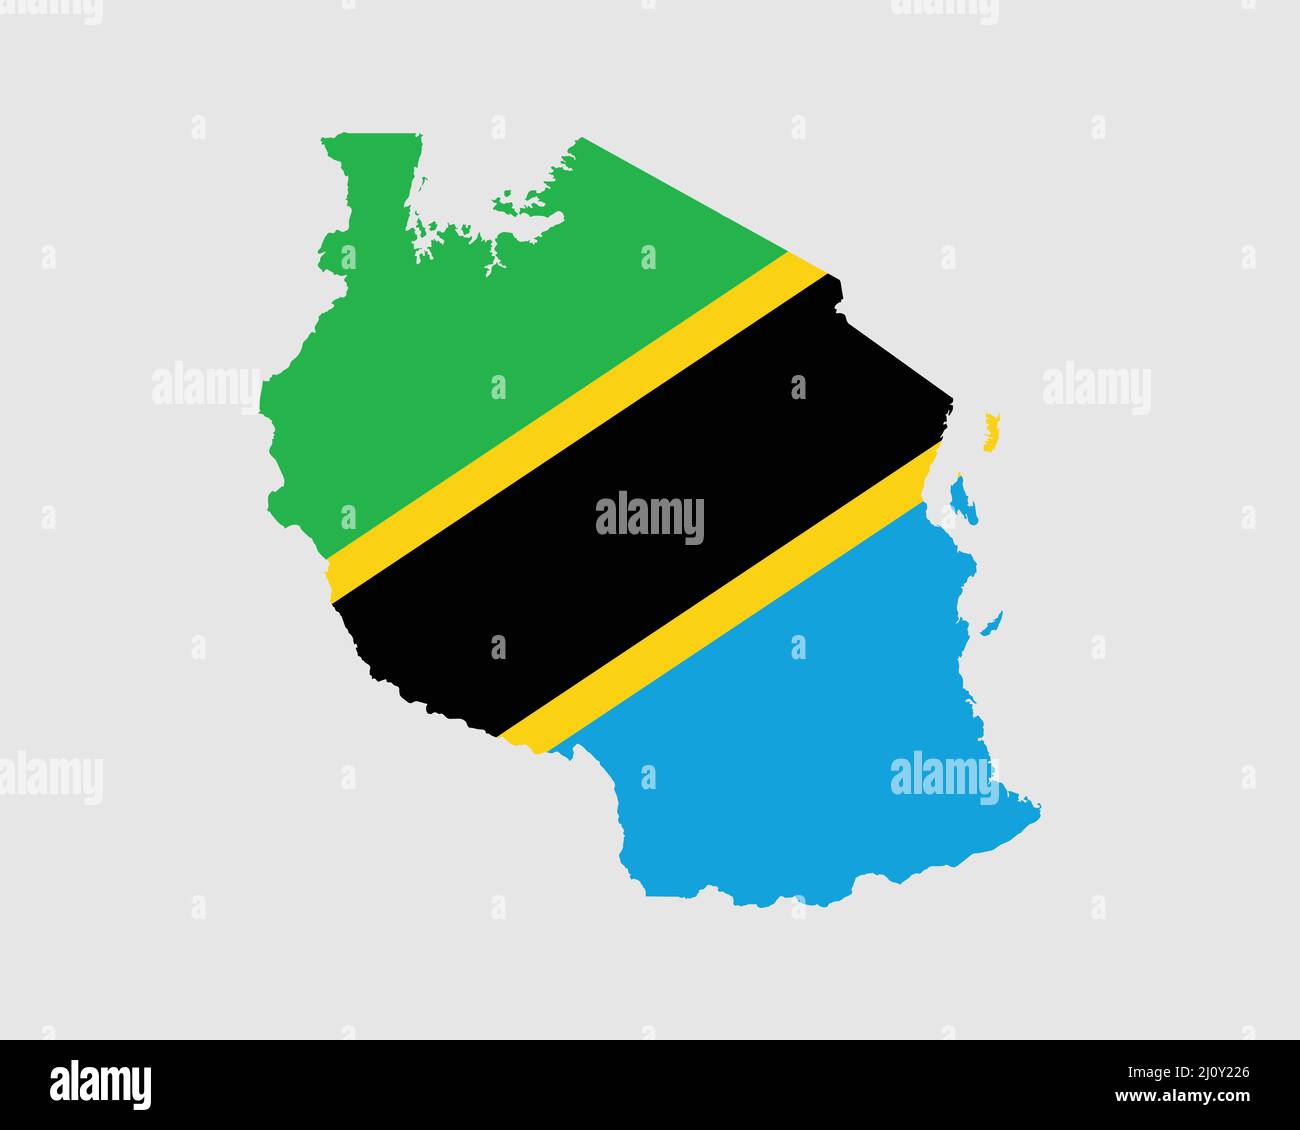 Karte Der Flagge Tansanias. Karte der Vereinigten Republik Tansania mit dem tansanischen Landesbanner. Vektorgrafik. Stock Vektor